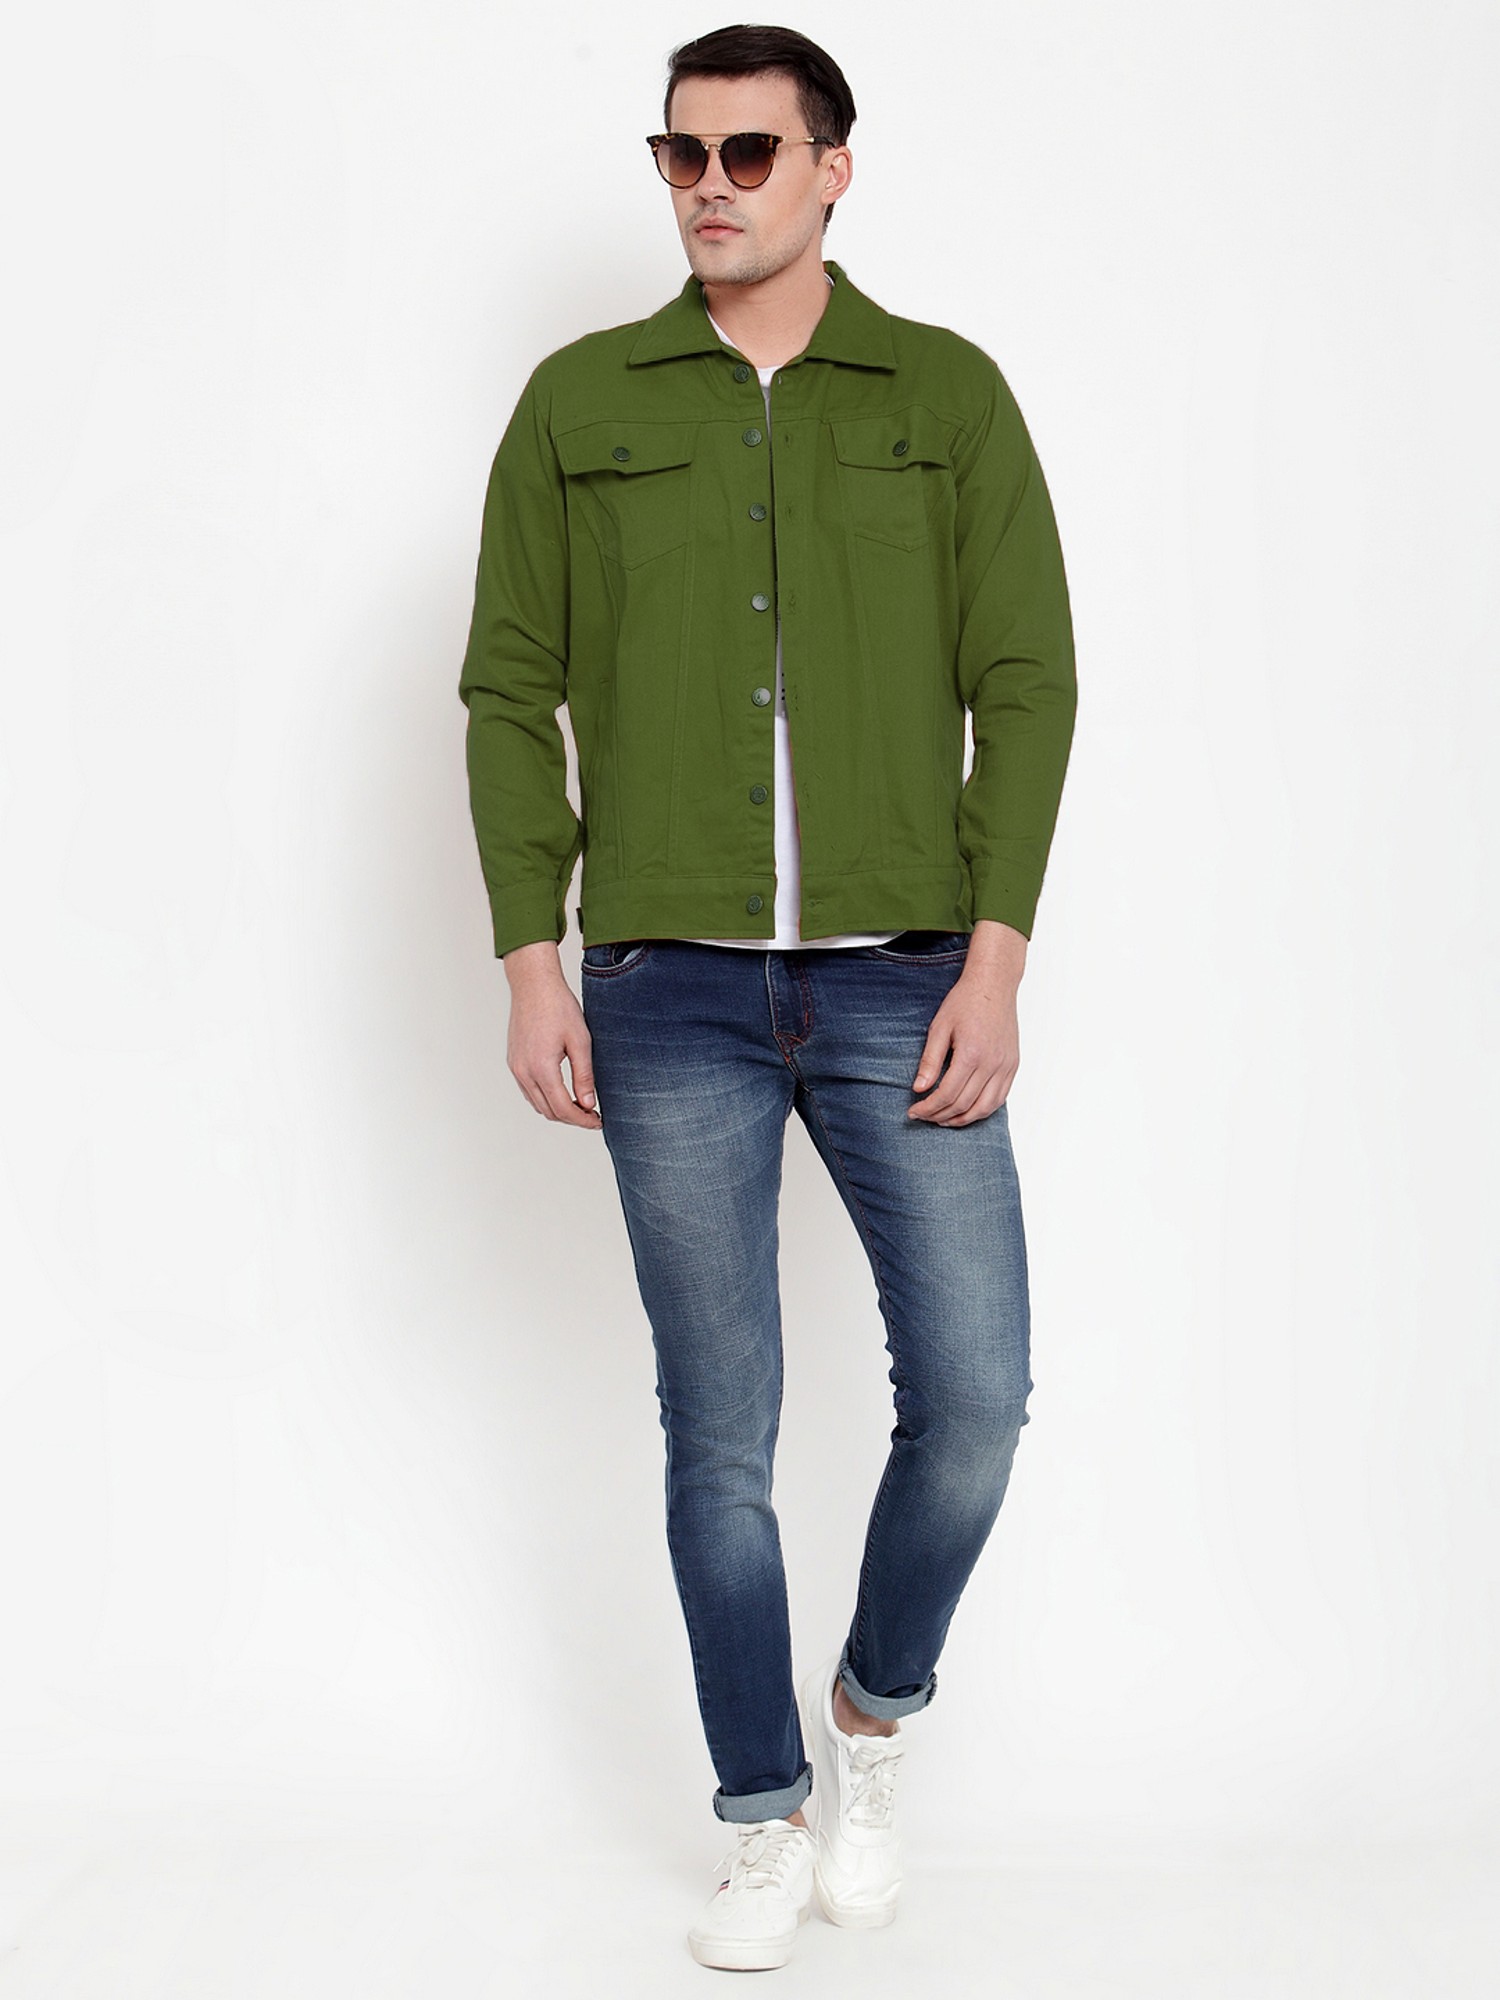 Buy Men Olive Solid Casual Jacket Online - 764755 | Peter England